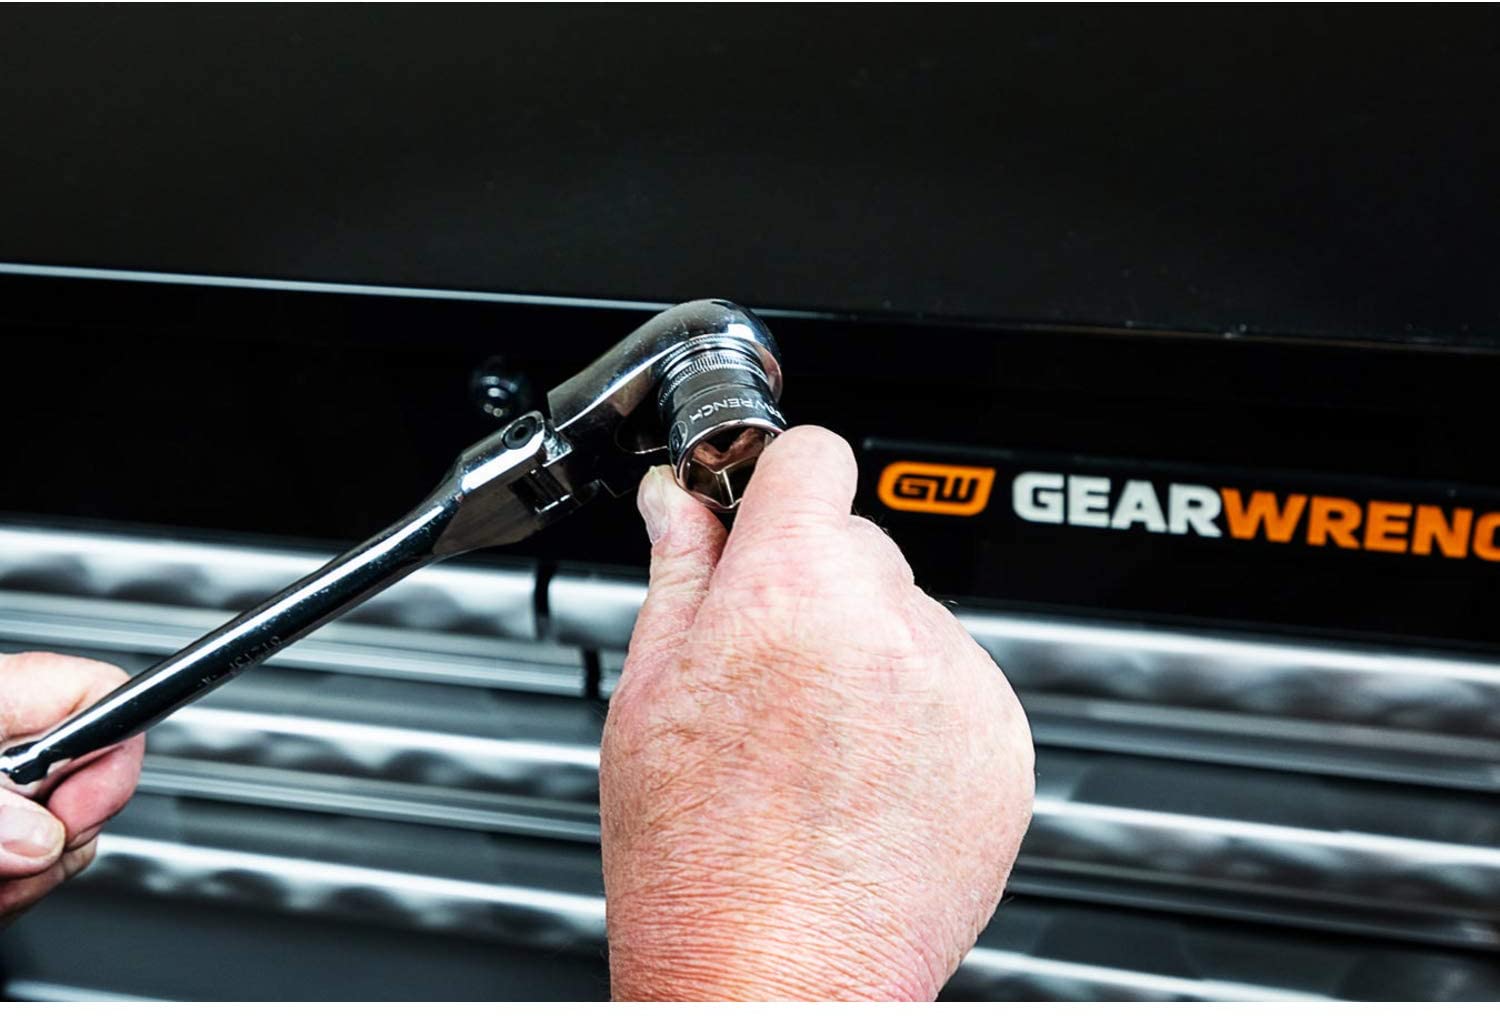 GEARWRENCH 3/8" Drive 120XP Flex Head Teardrop Ratchet 11-1/2" - 81215P - MPR Tools & Equipment